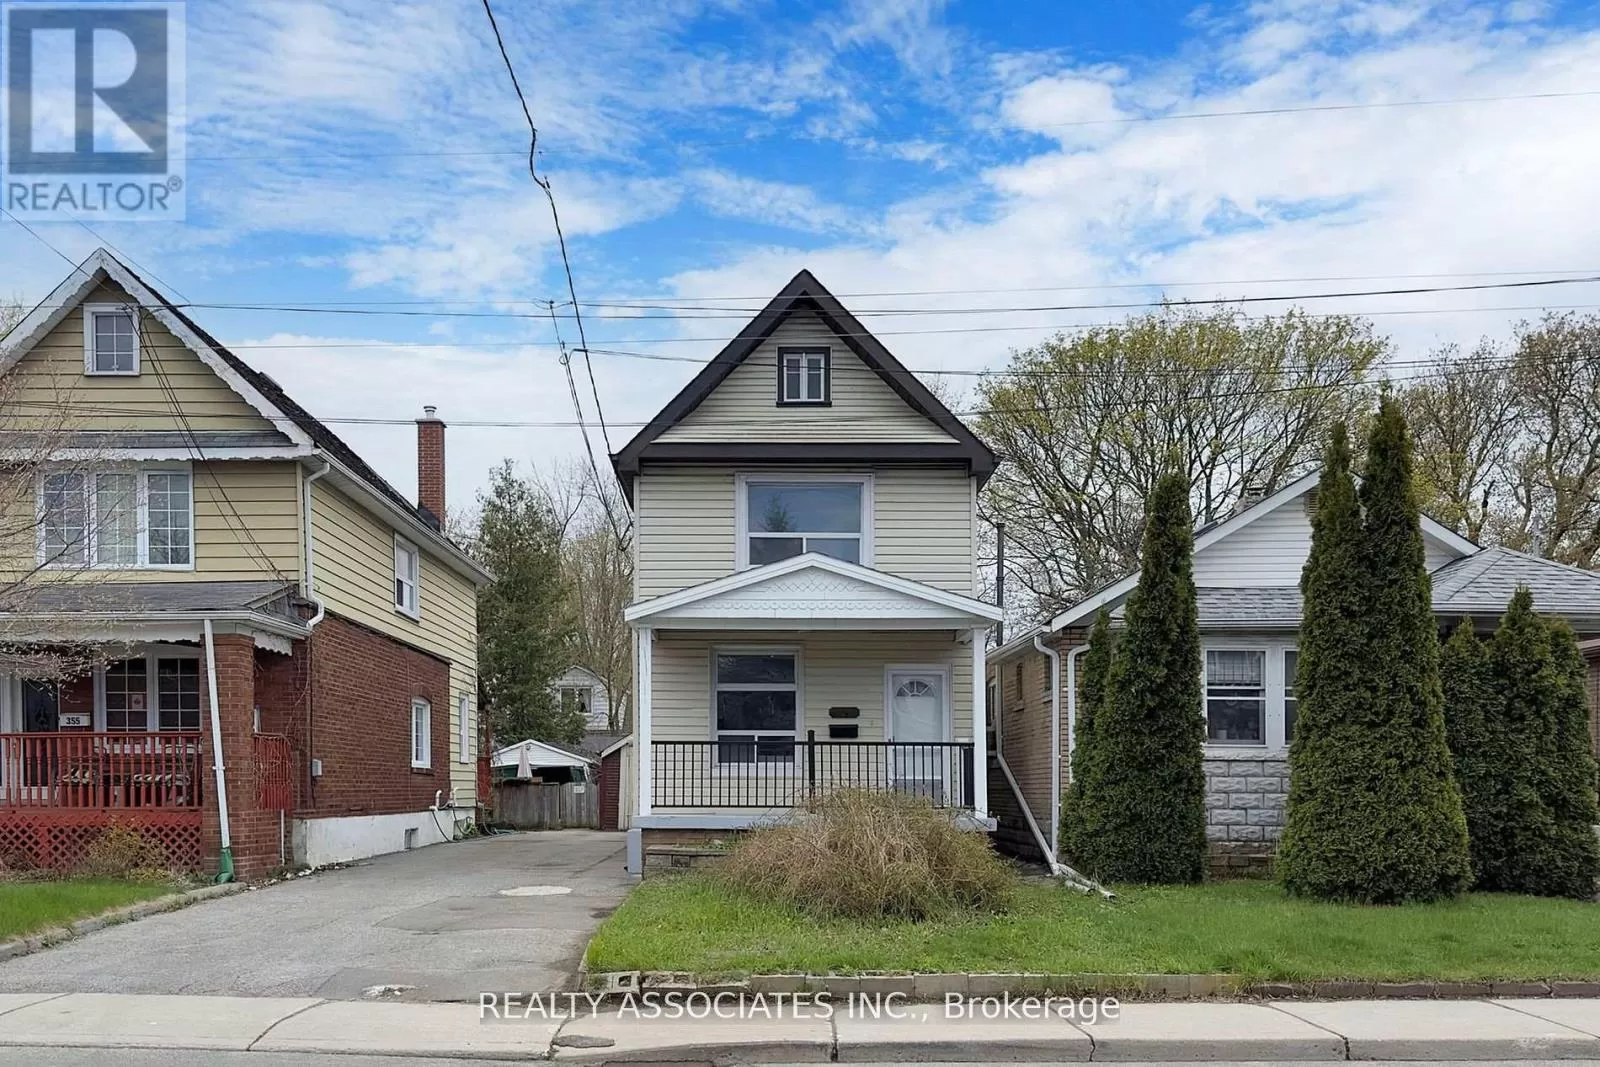 House for rent: 353 Lumsden Avenue, Toronto, Ontario M4C 2L2